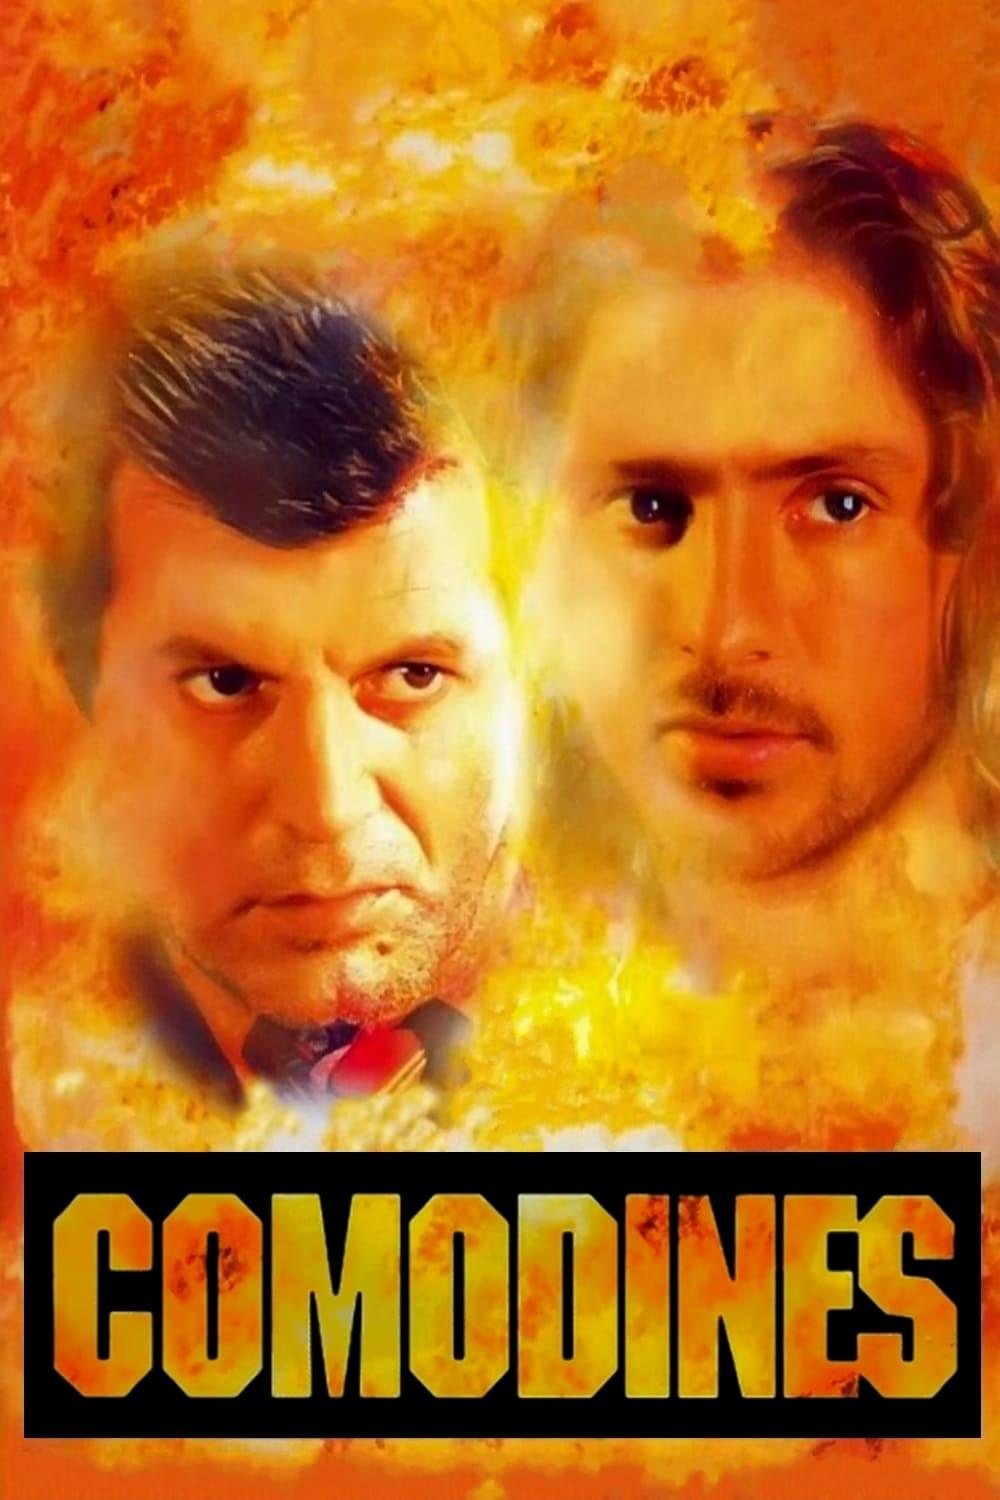 Comodines poster